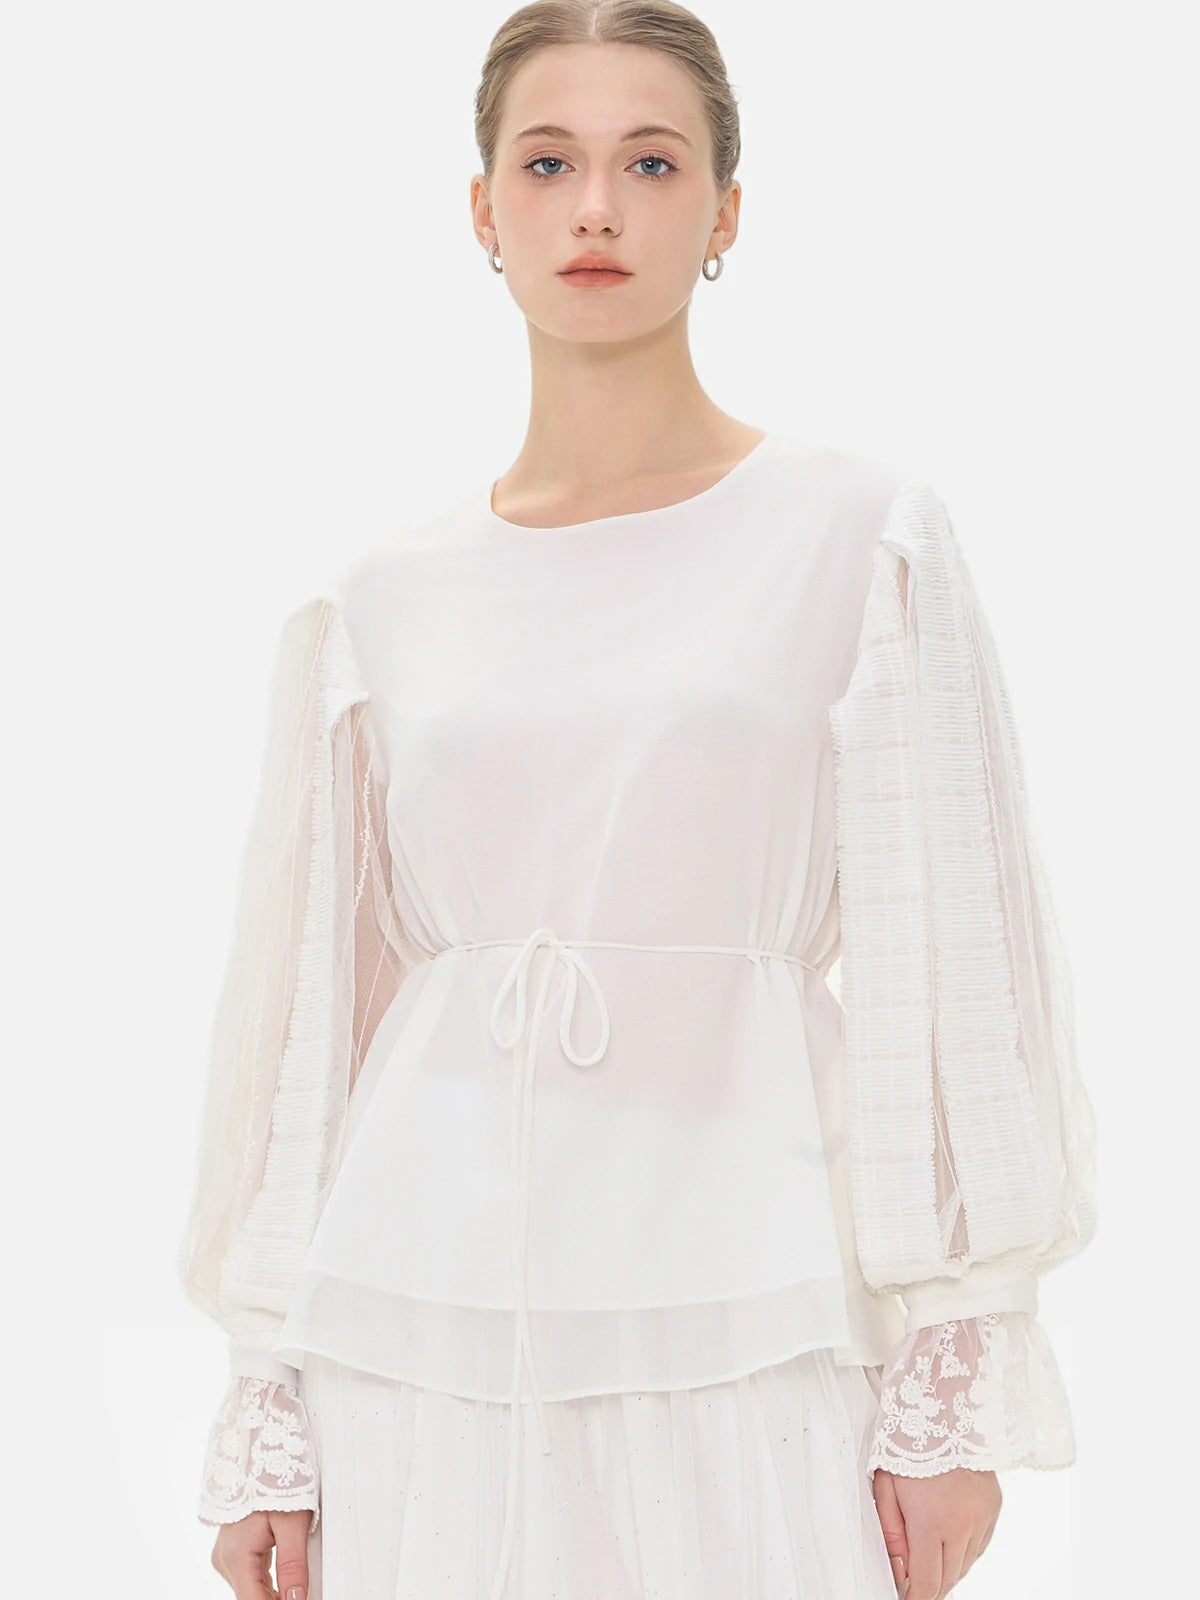 Elegant white blouse with round neckline